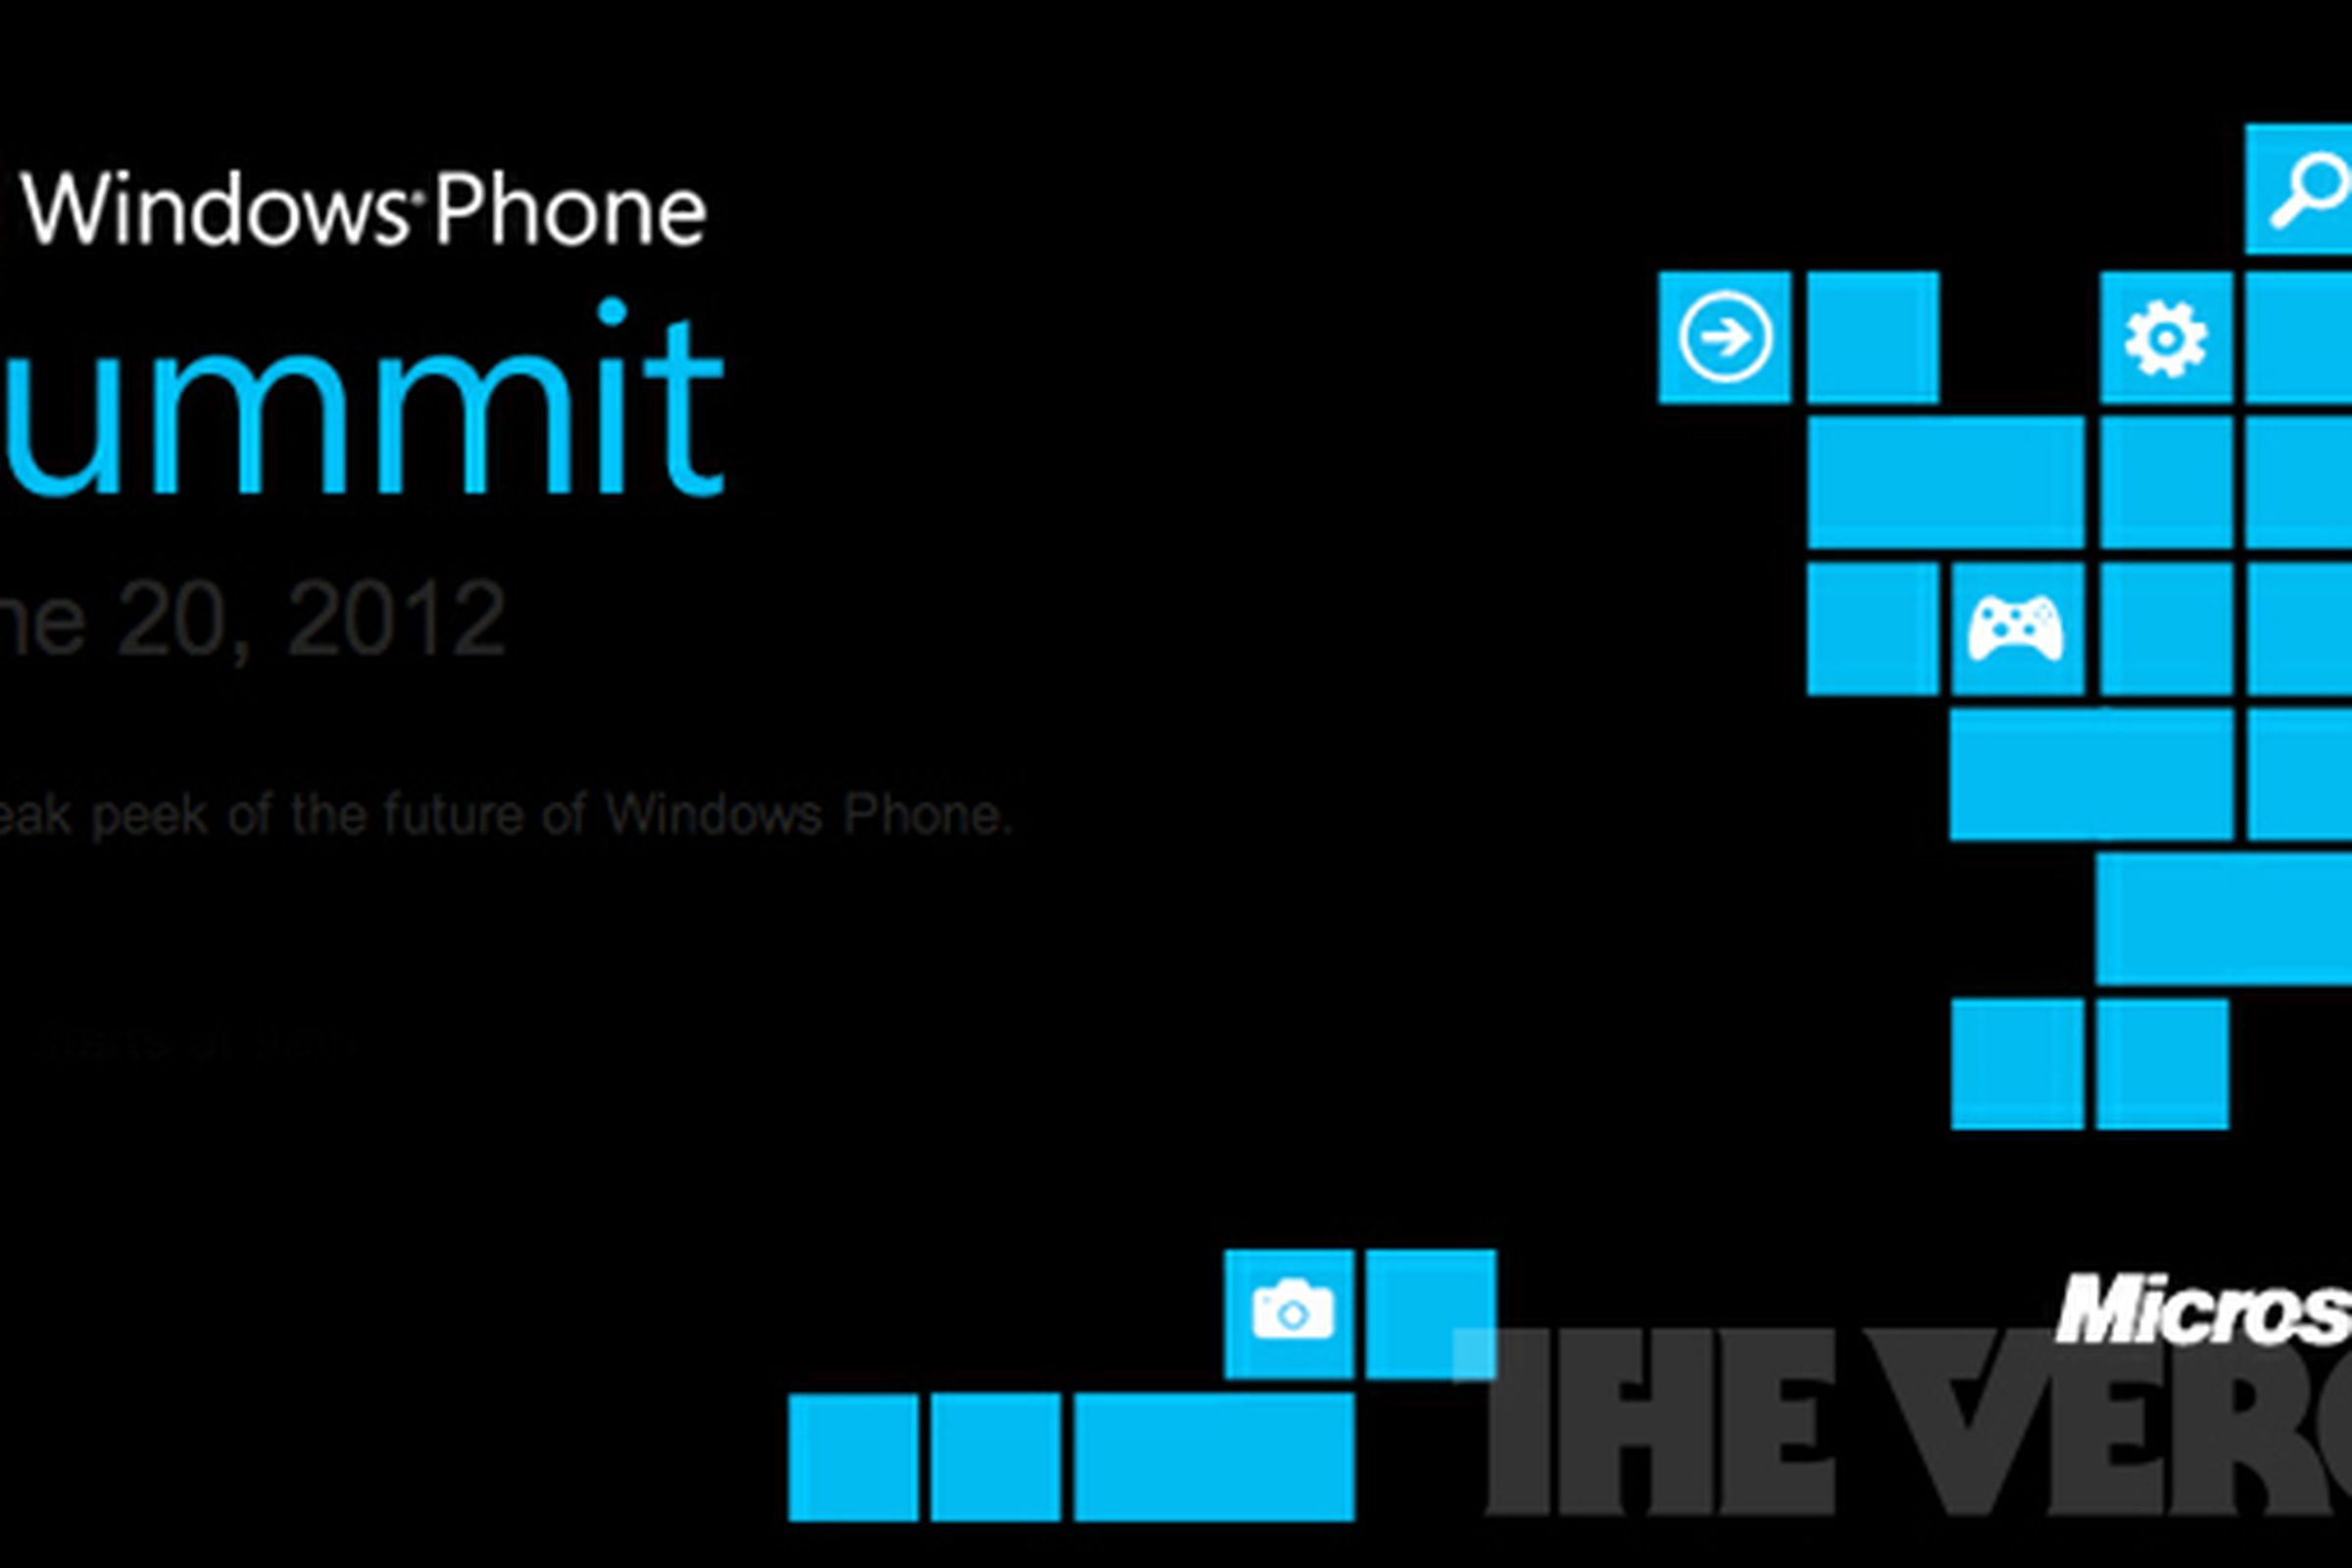 Windows Phone developer summit invite